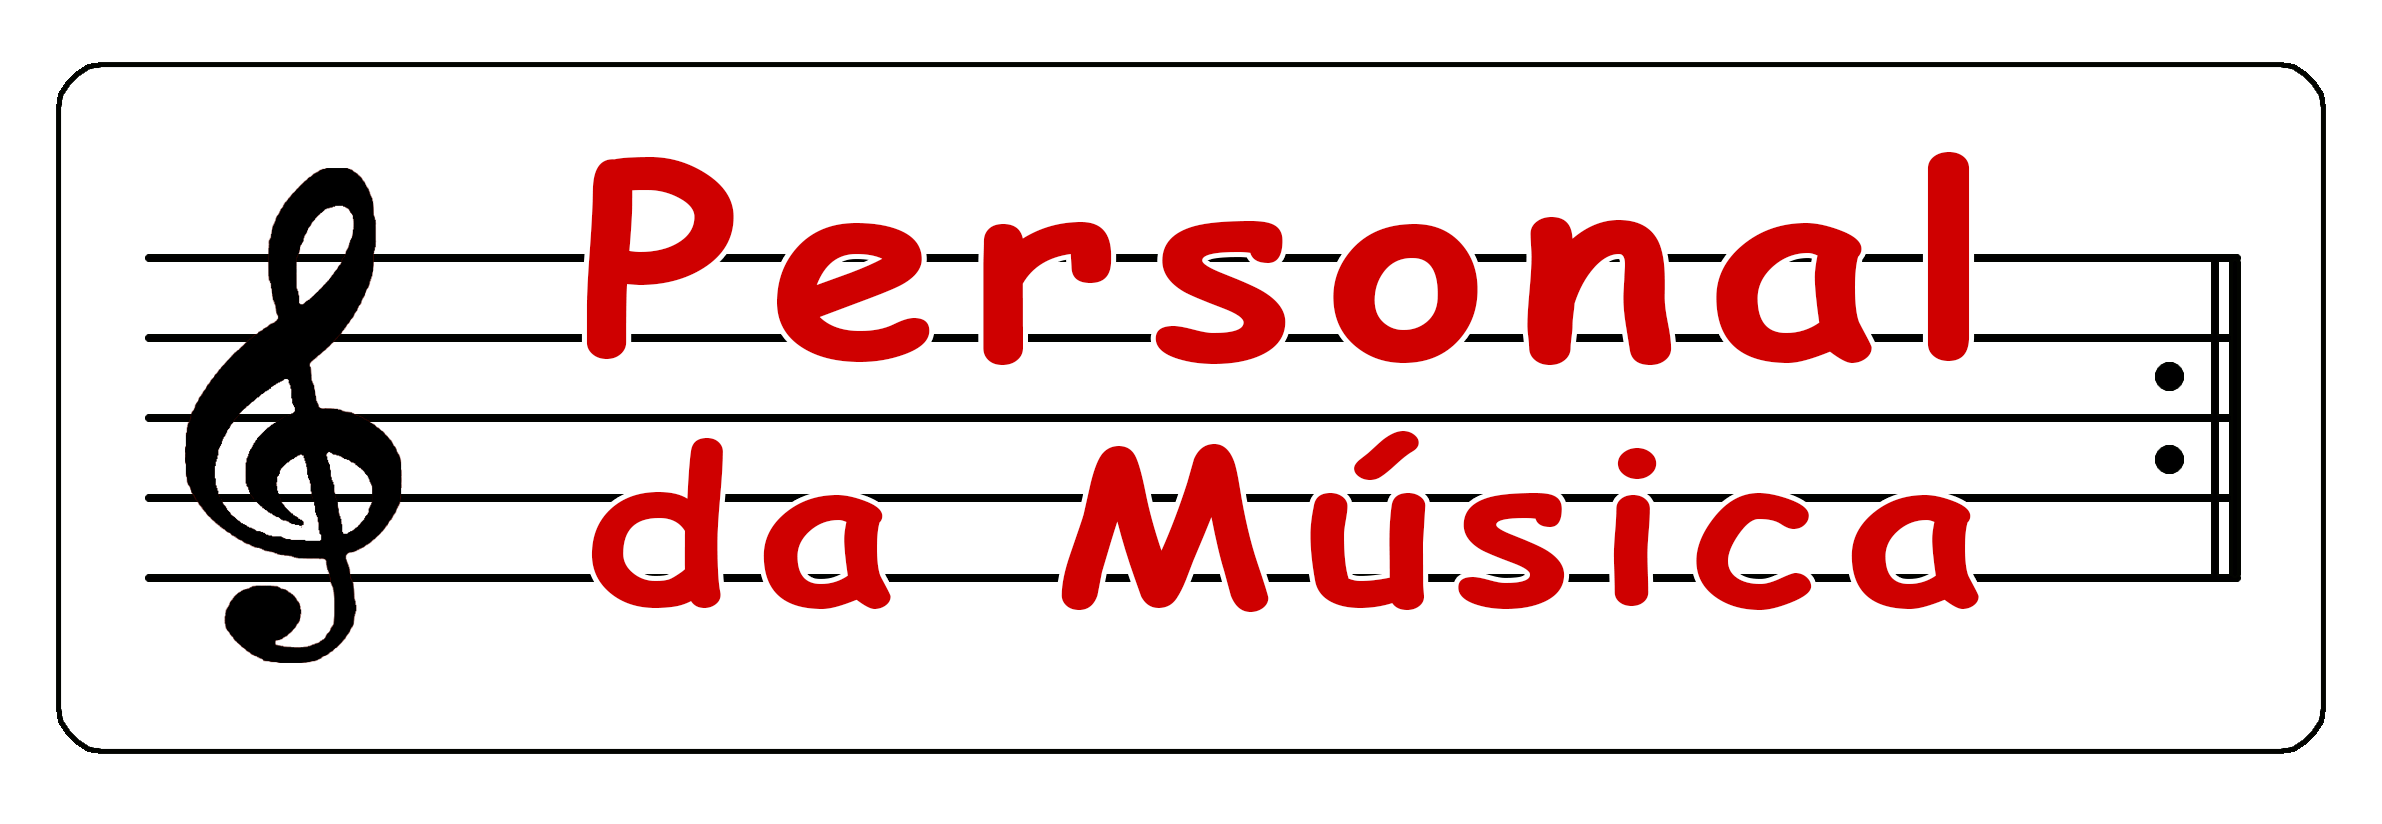 Personal da Música